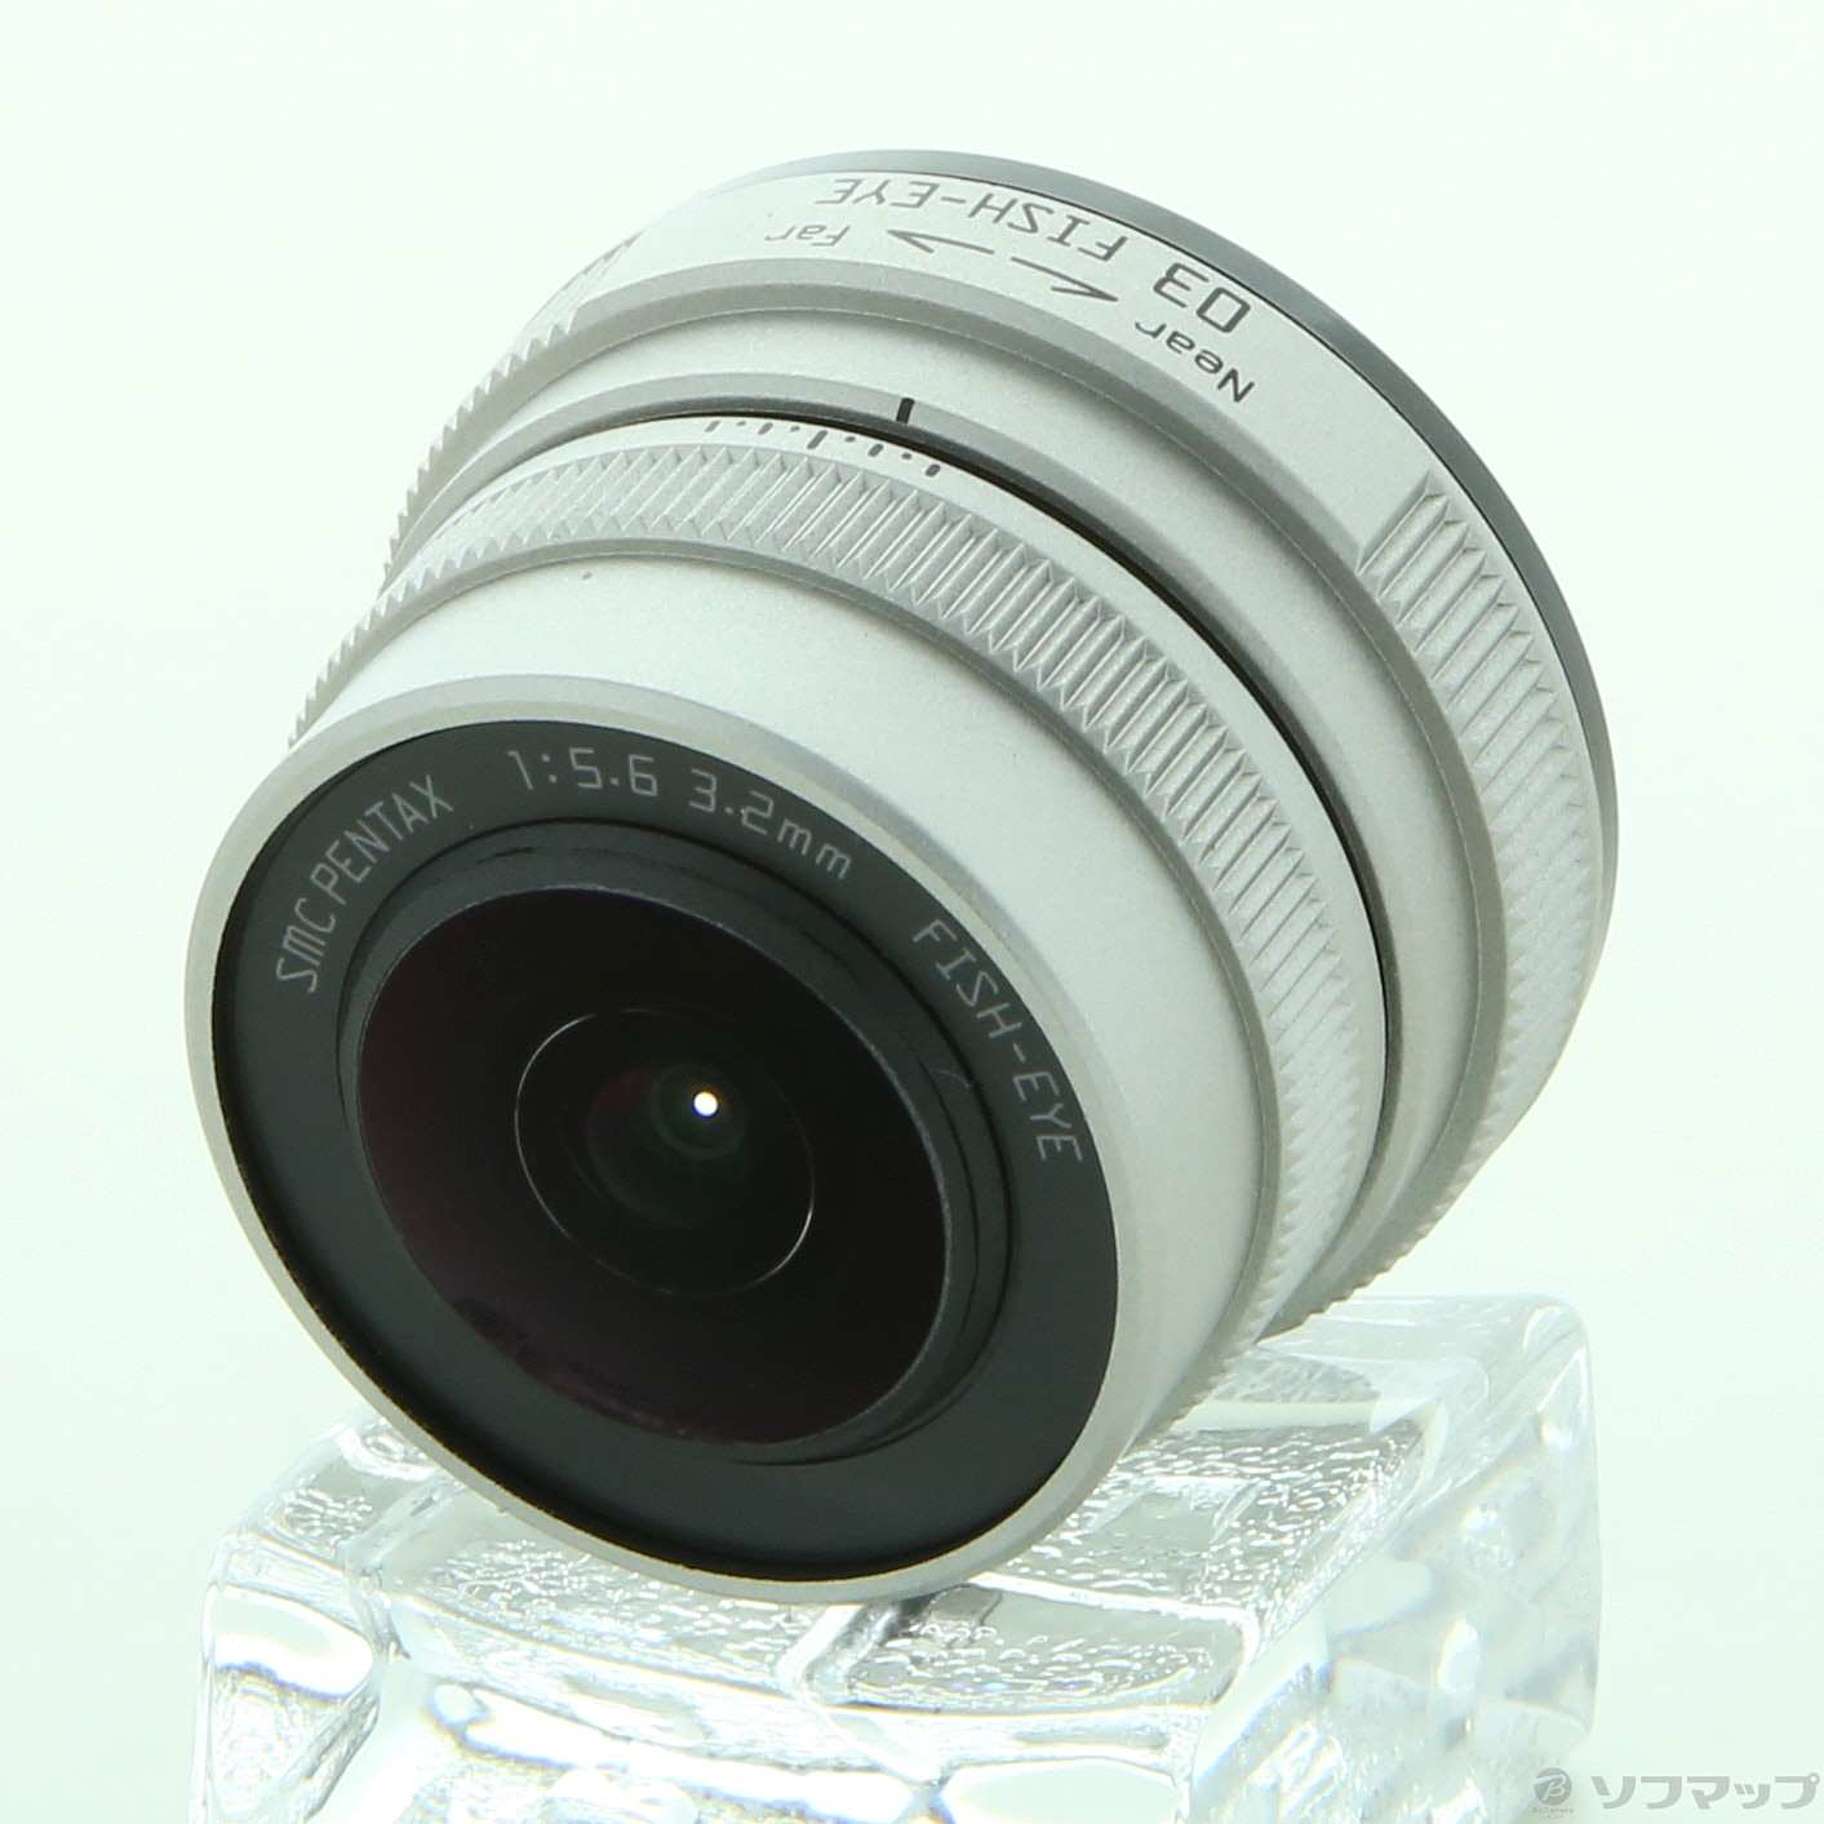 PENTAX 03 FISH-EYE (レンズ)(Q) 3.2mm F5.6